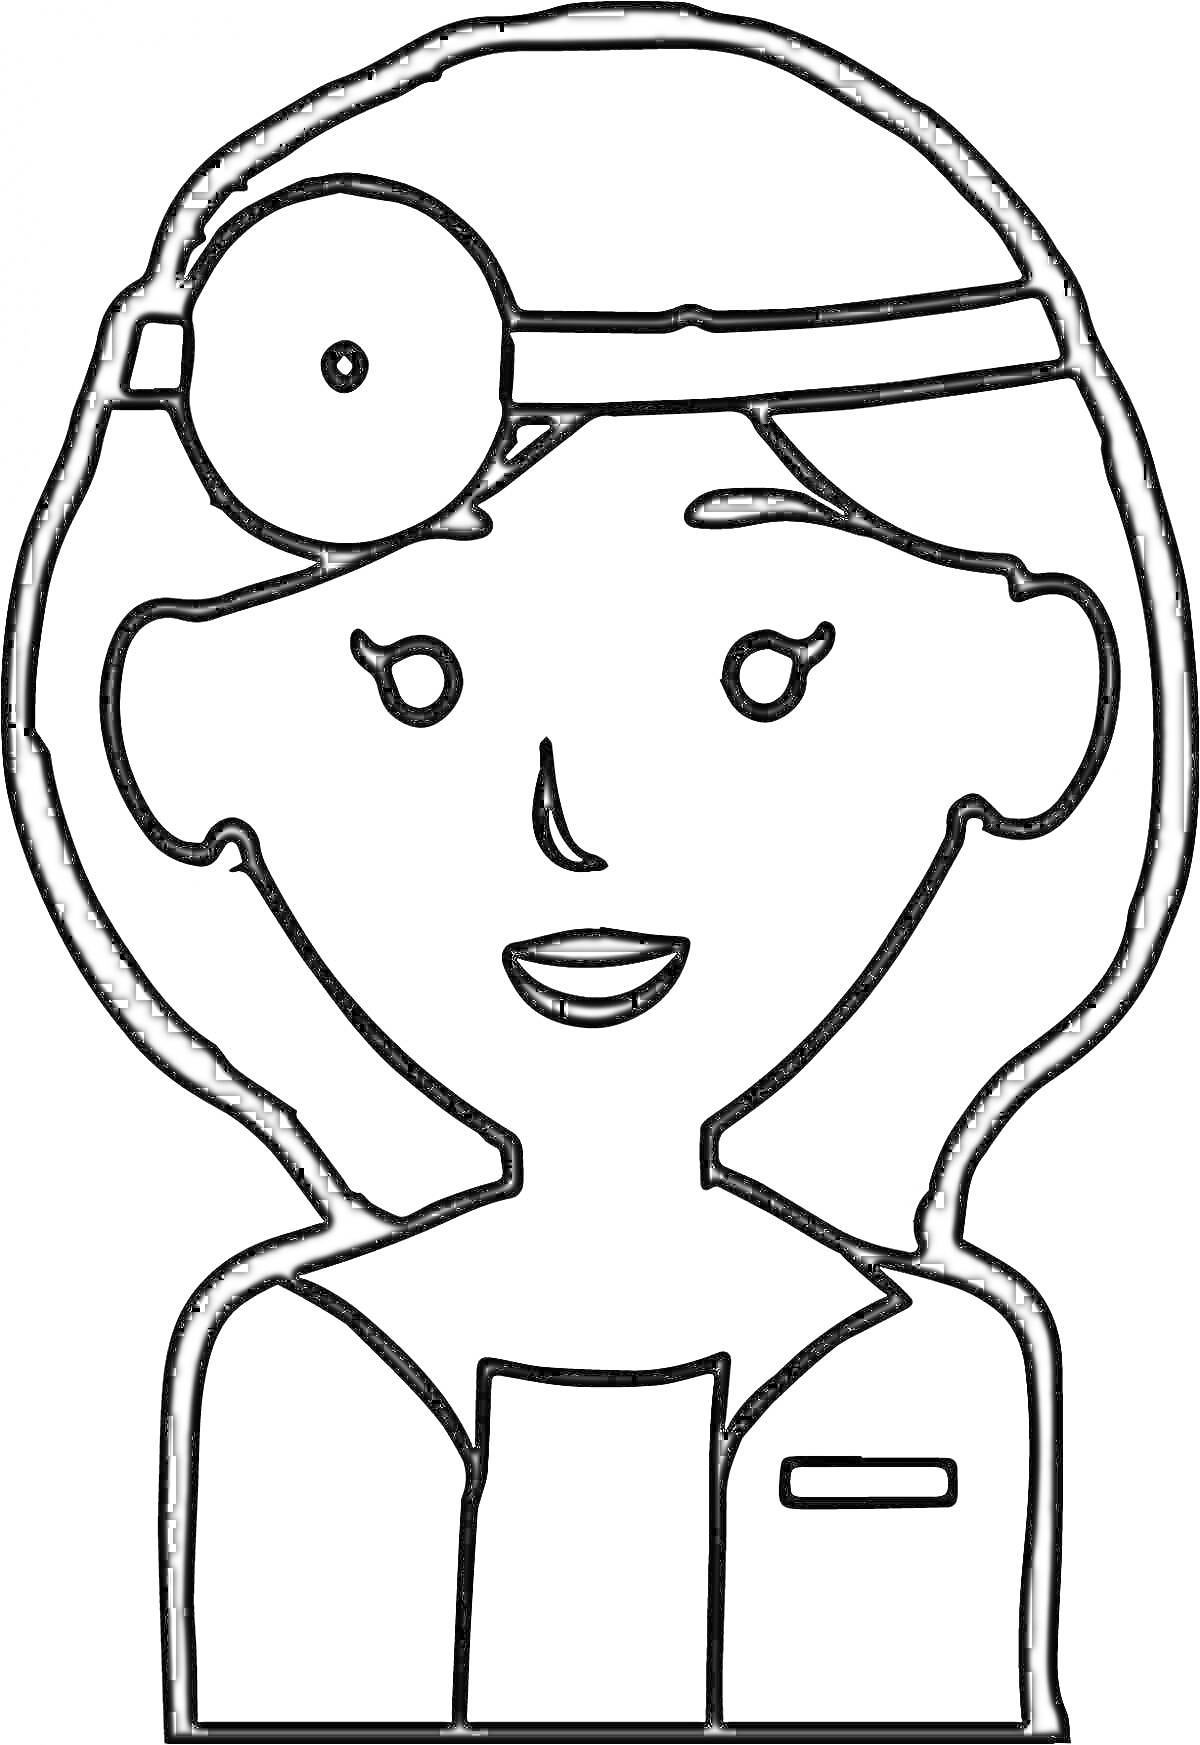 Раскраска Врач-отоларинголог с рефлектором на голове